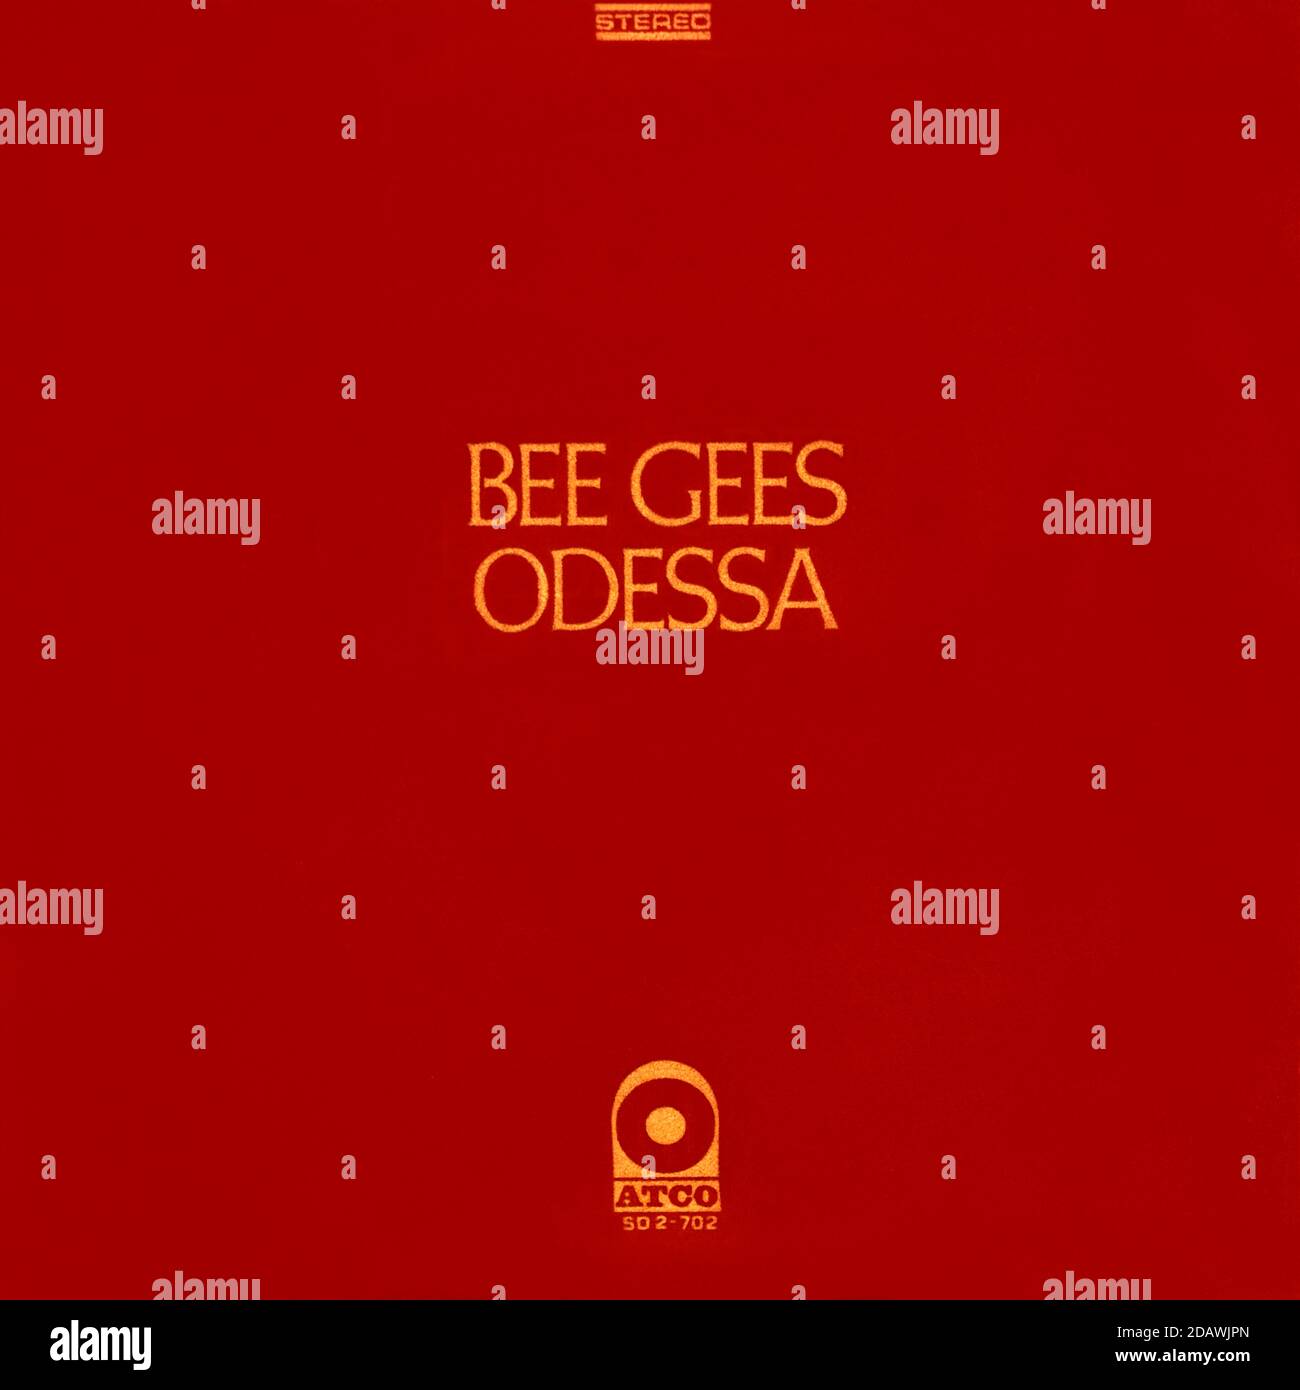 The Bee Gees - original vinyl album cover - Odessa - 1969 Stock Photo